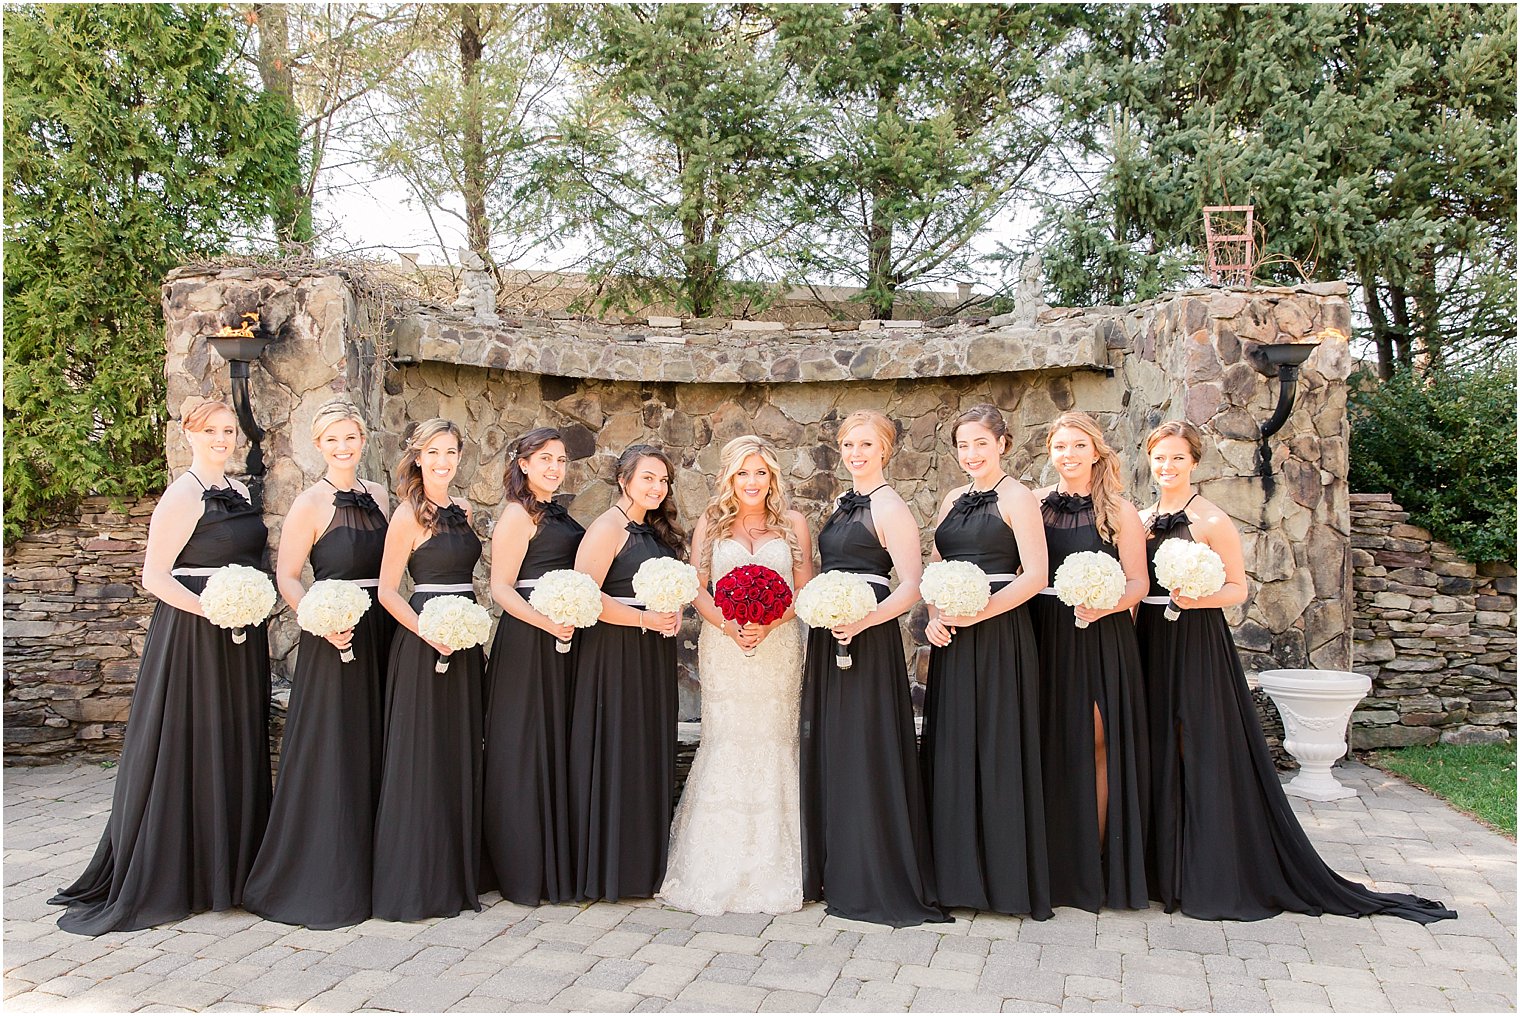 Elegant wedding with bridesmaids in black | Photo by Idalia Photography